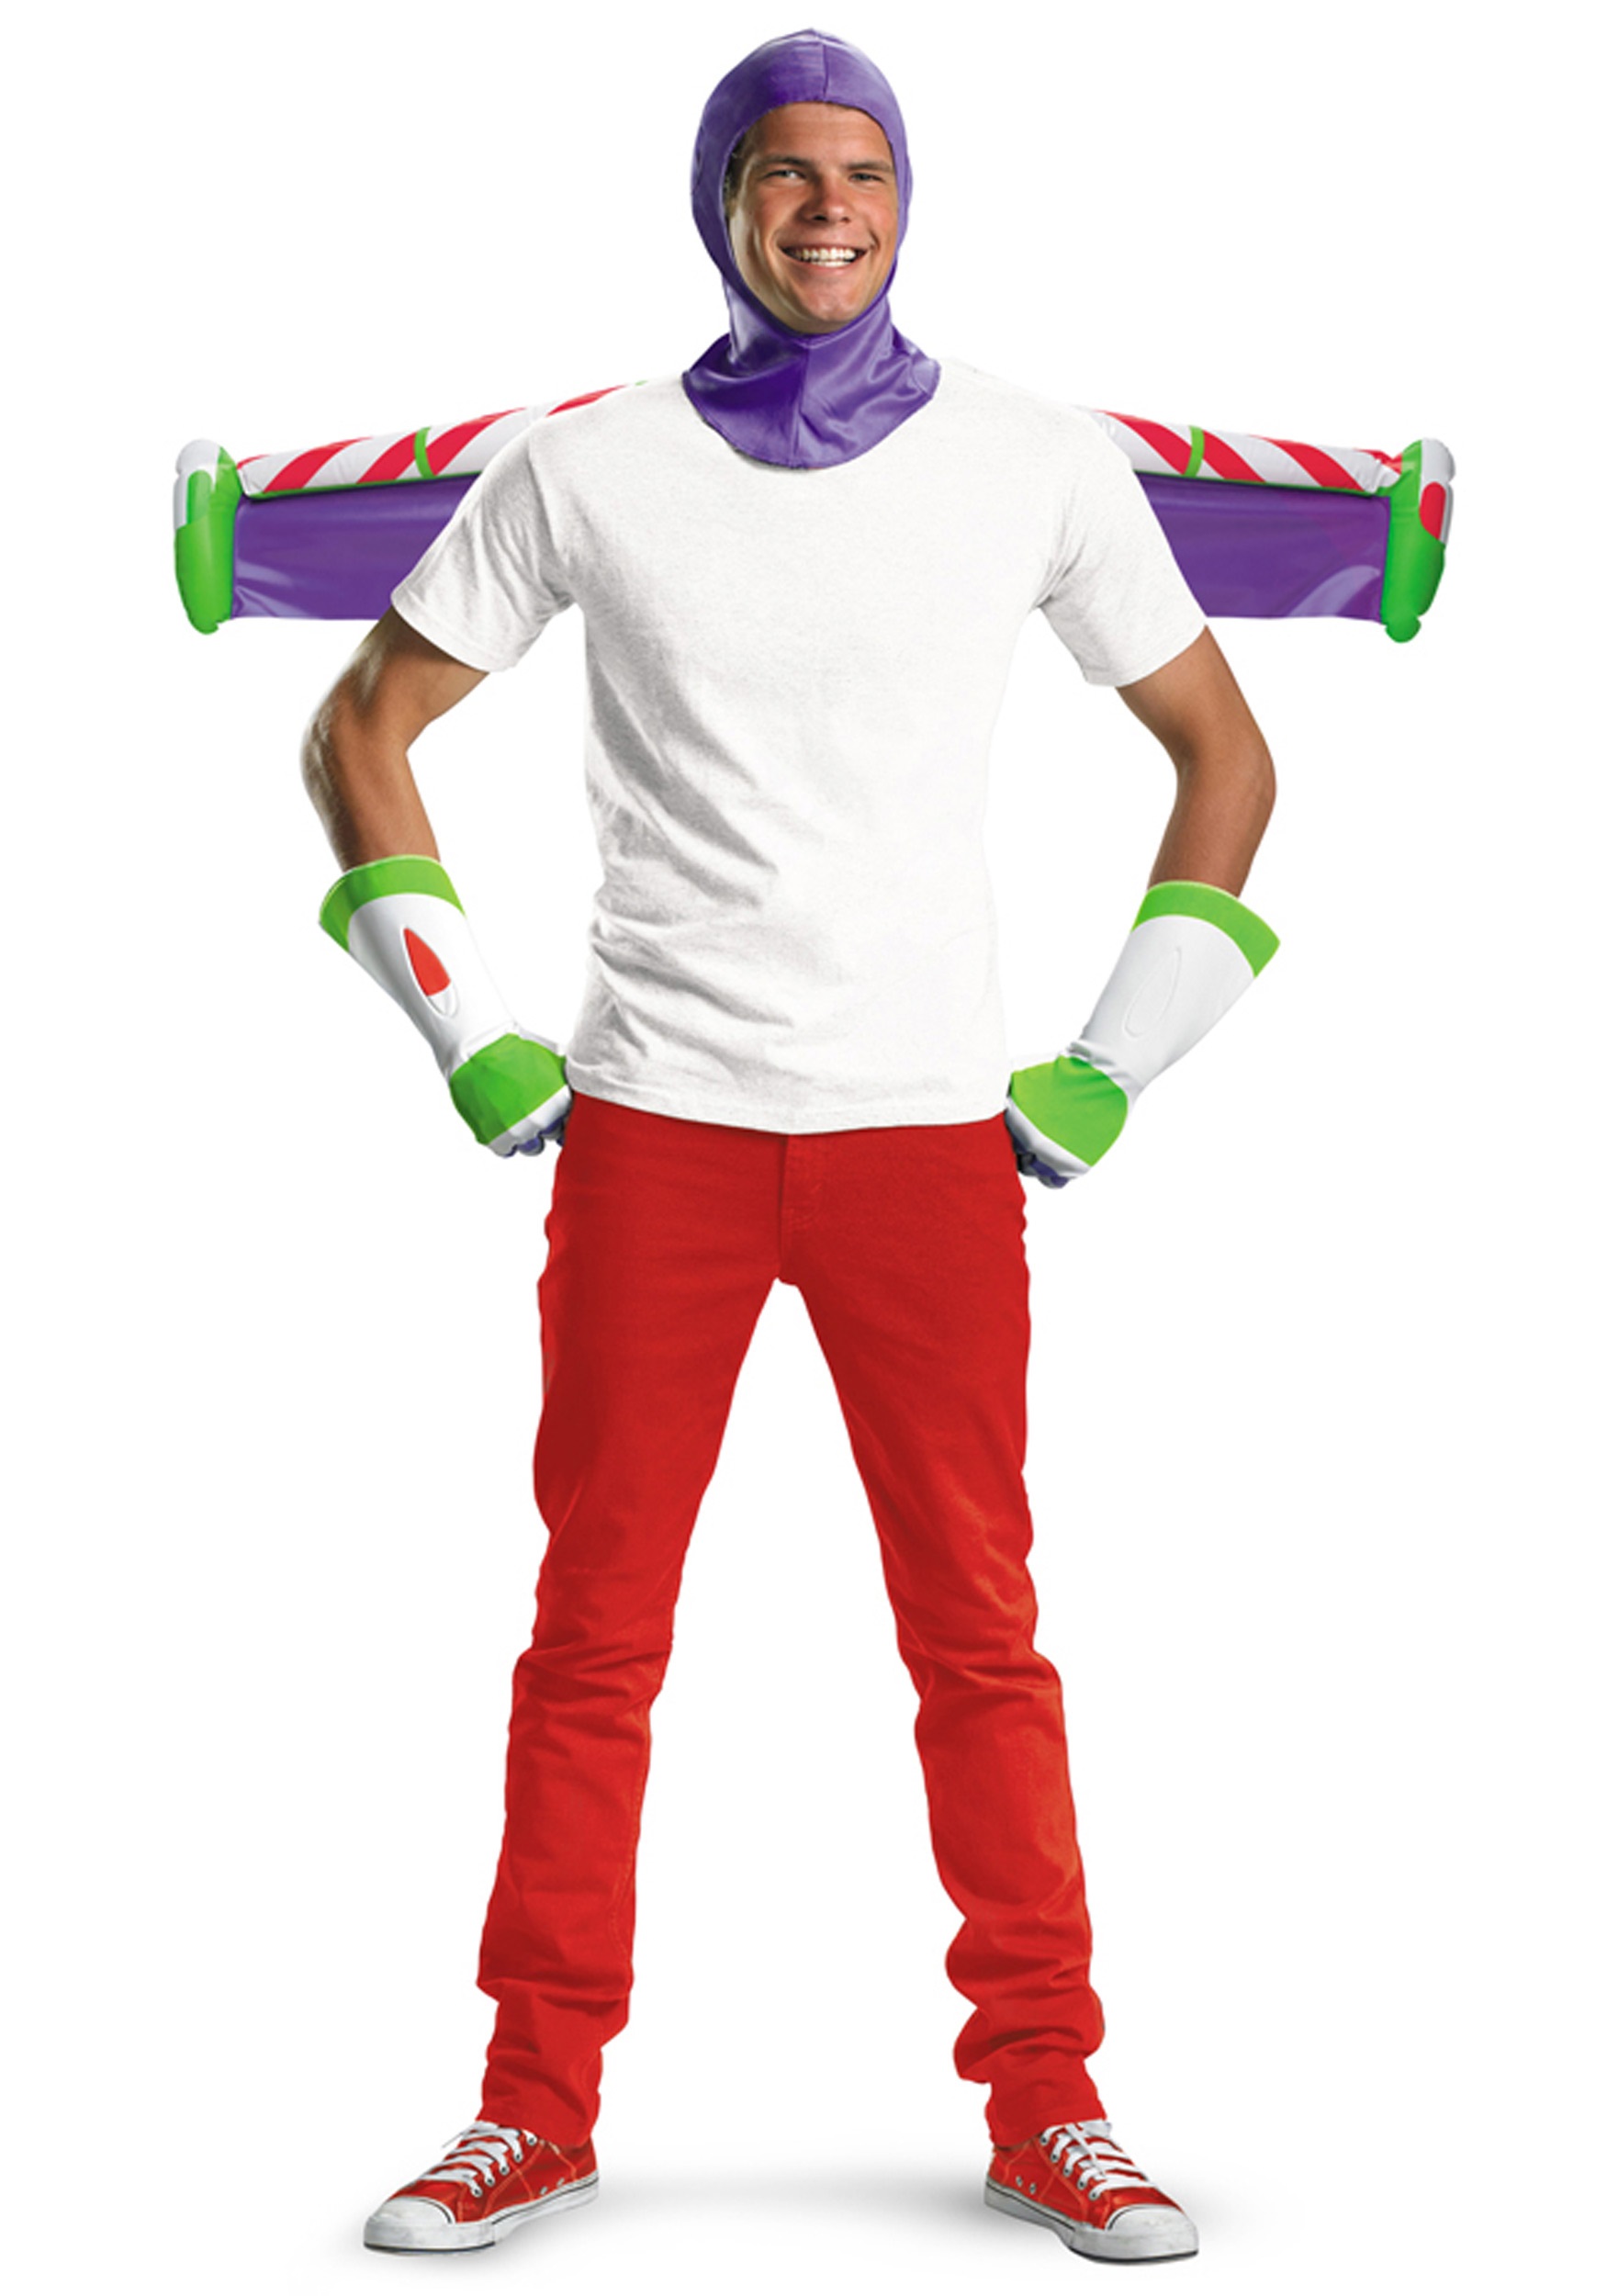 Adult Jessie Costume Kit - Toy Story 